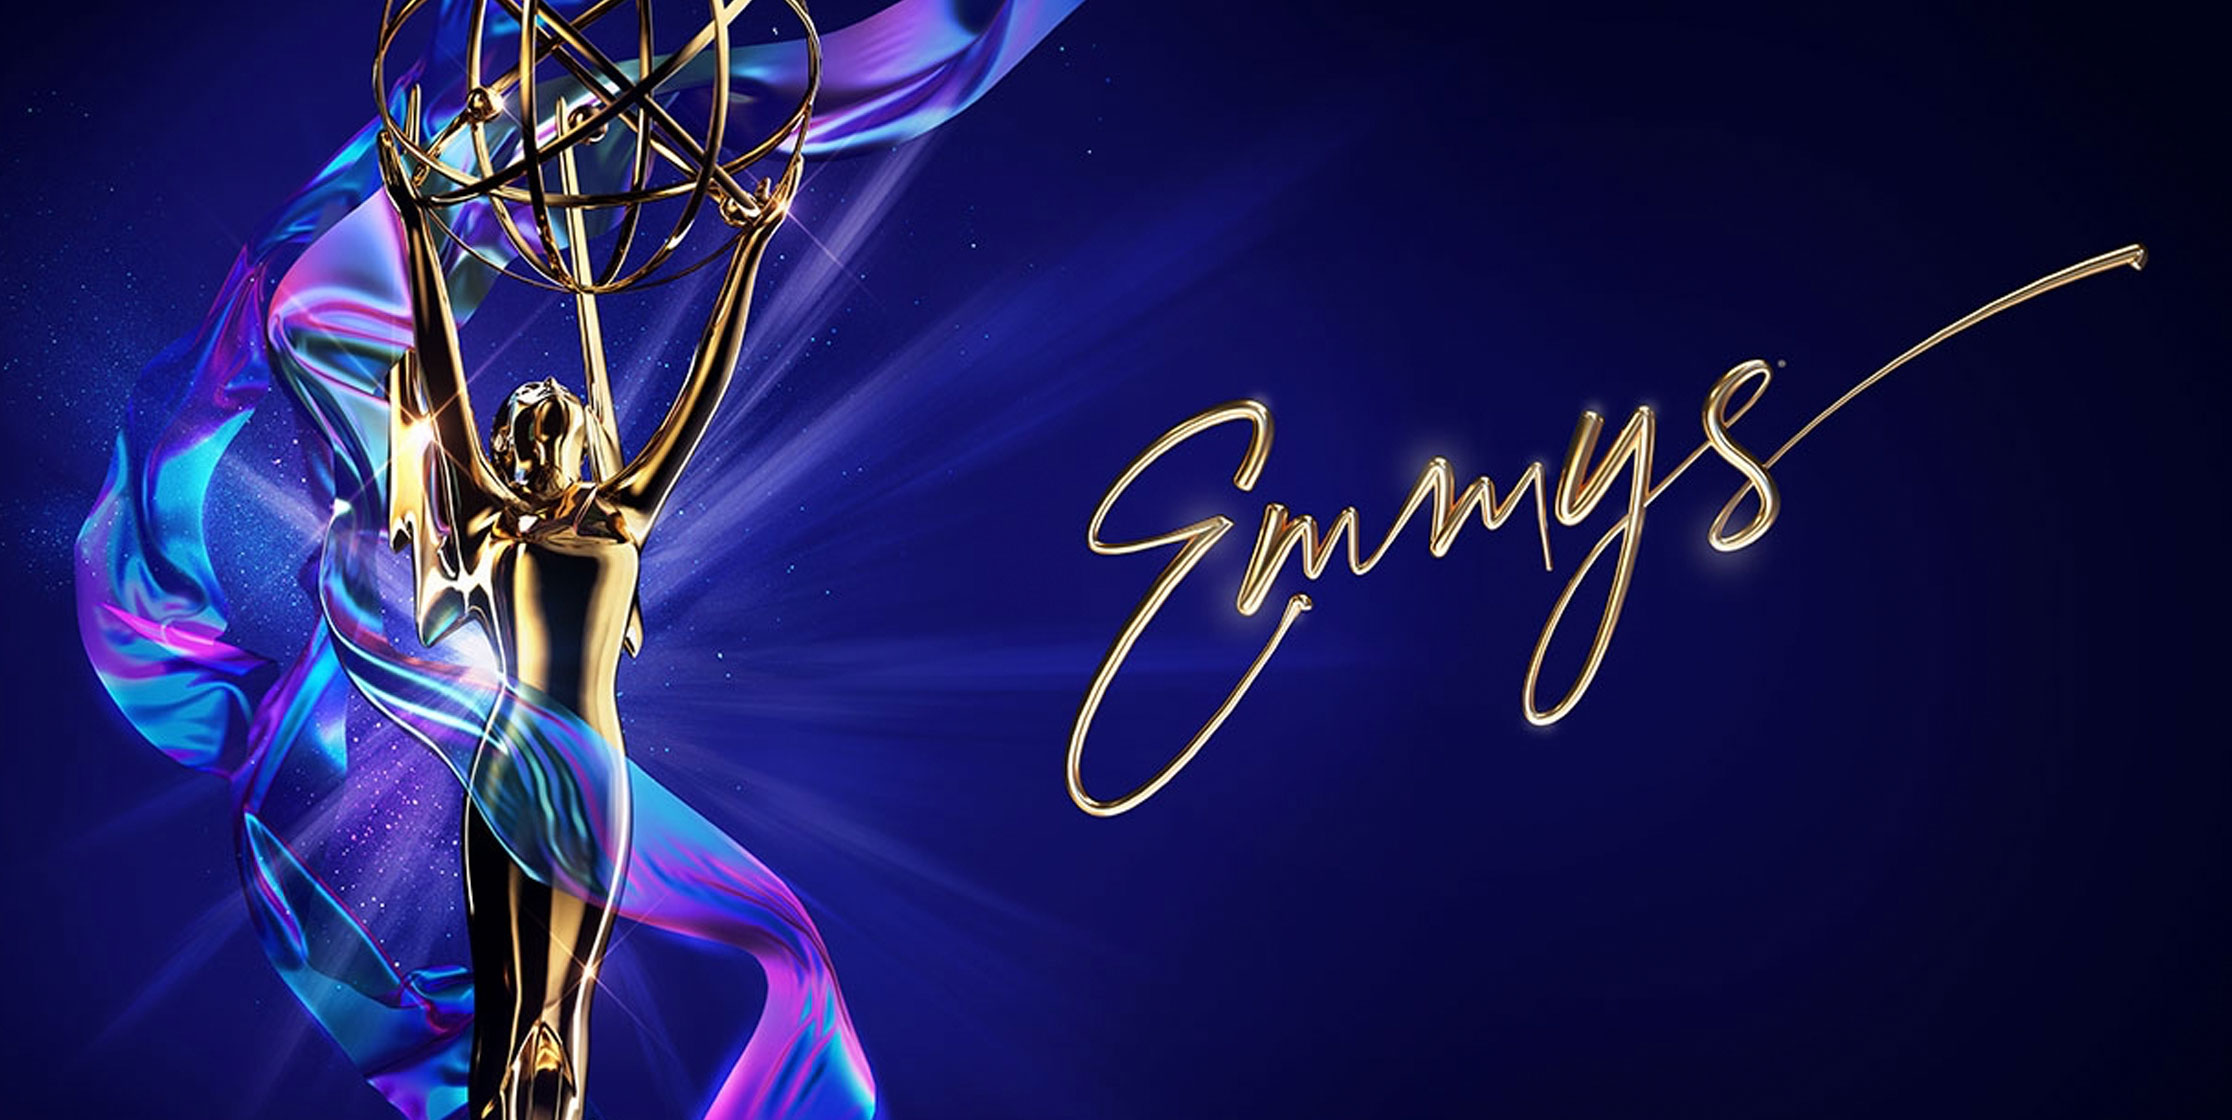 Director – Emmys